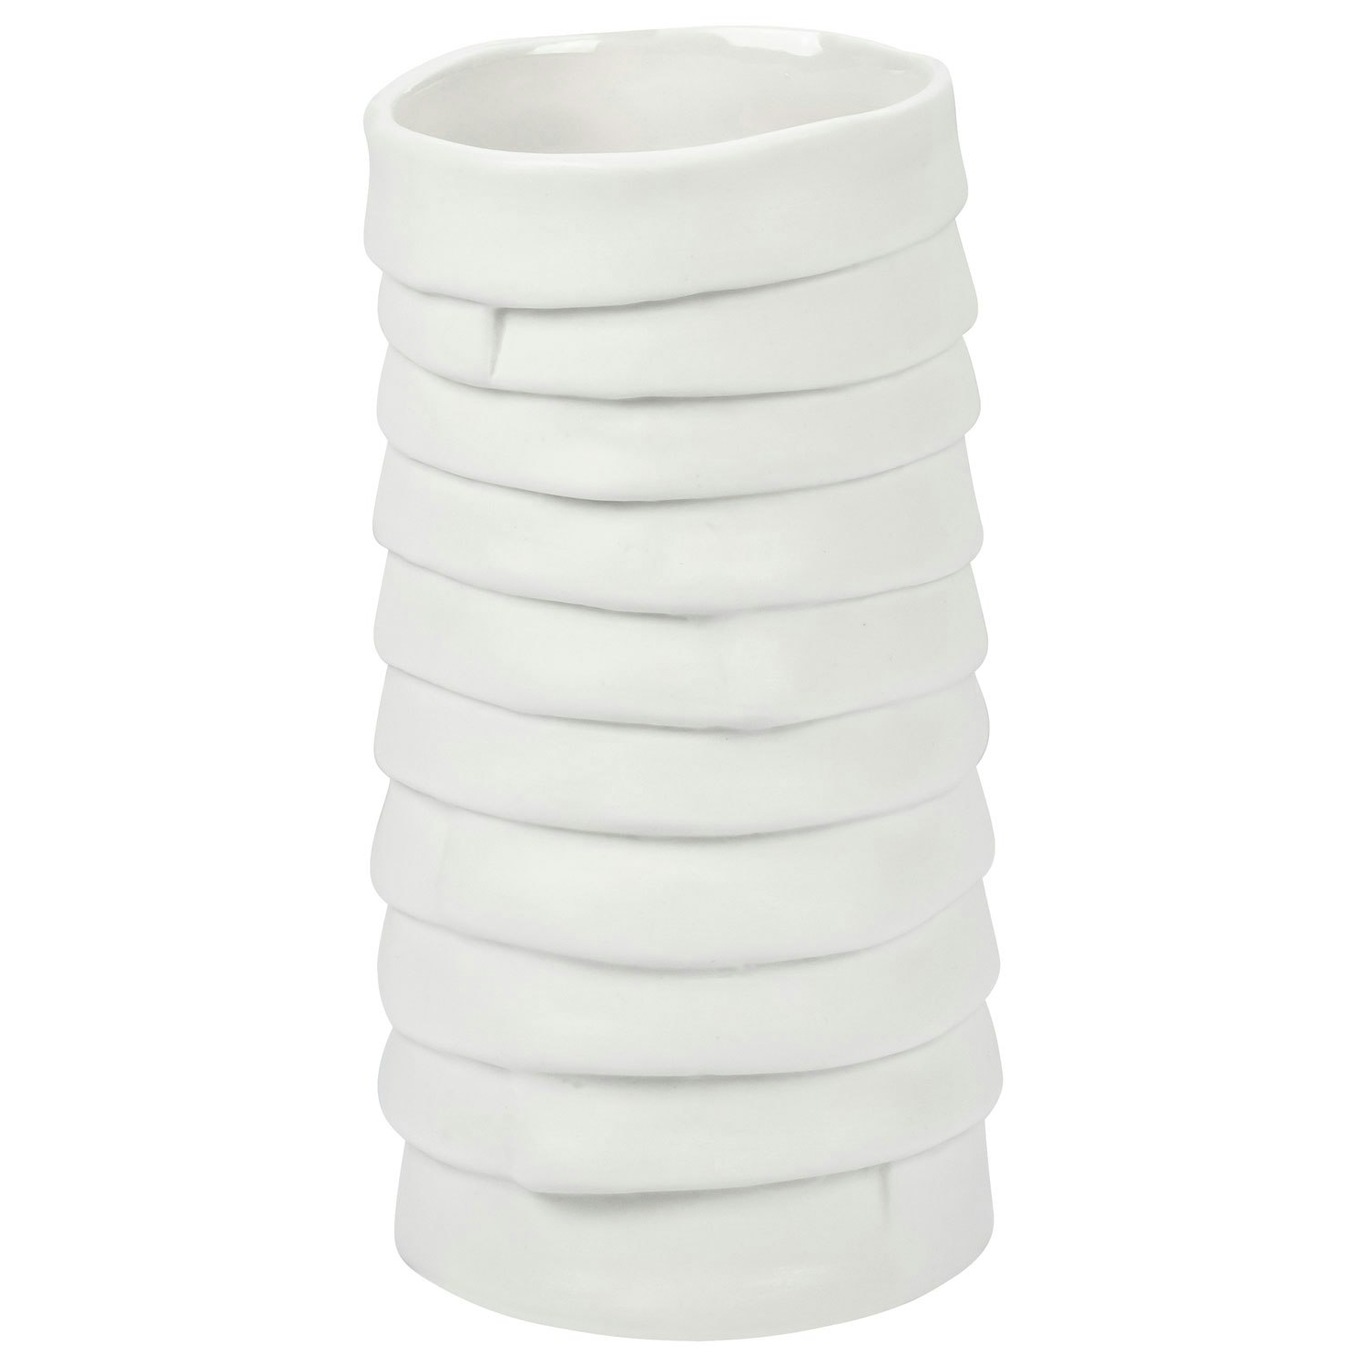 RIBBON Vase Off-white, Small